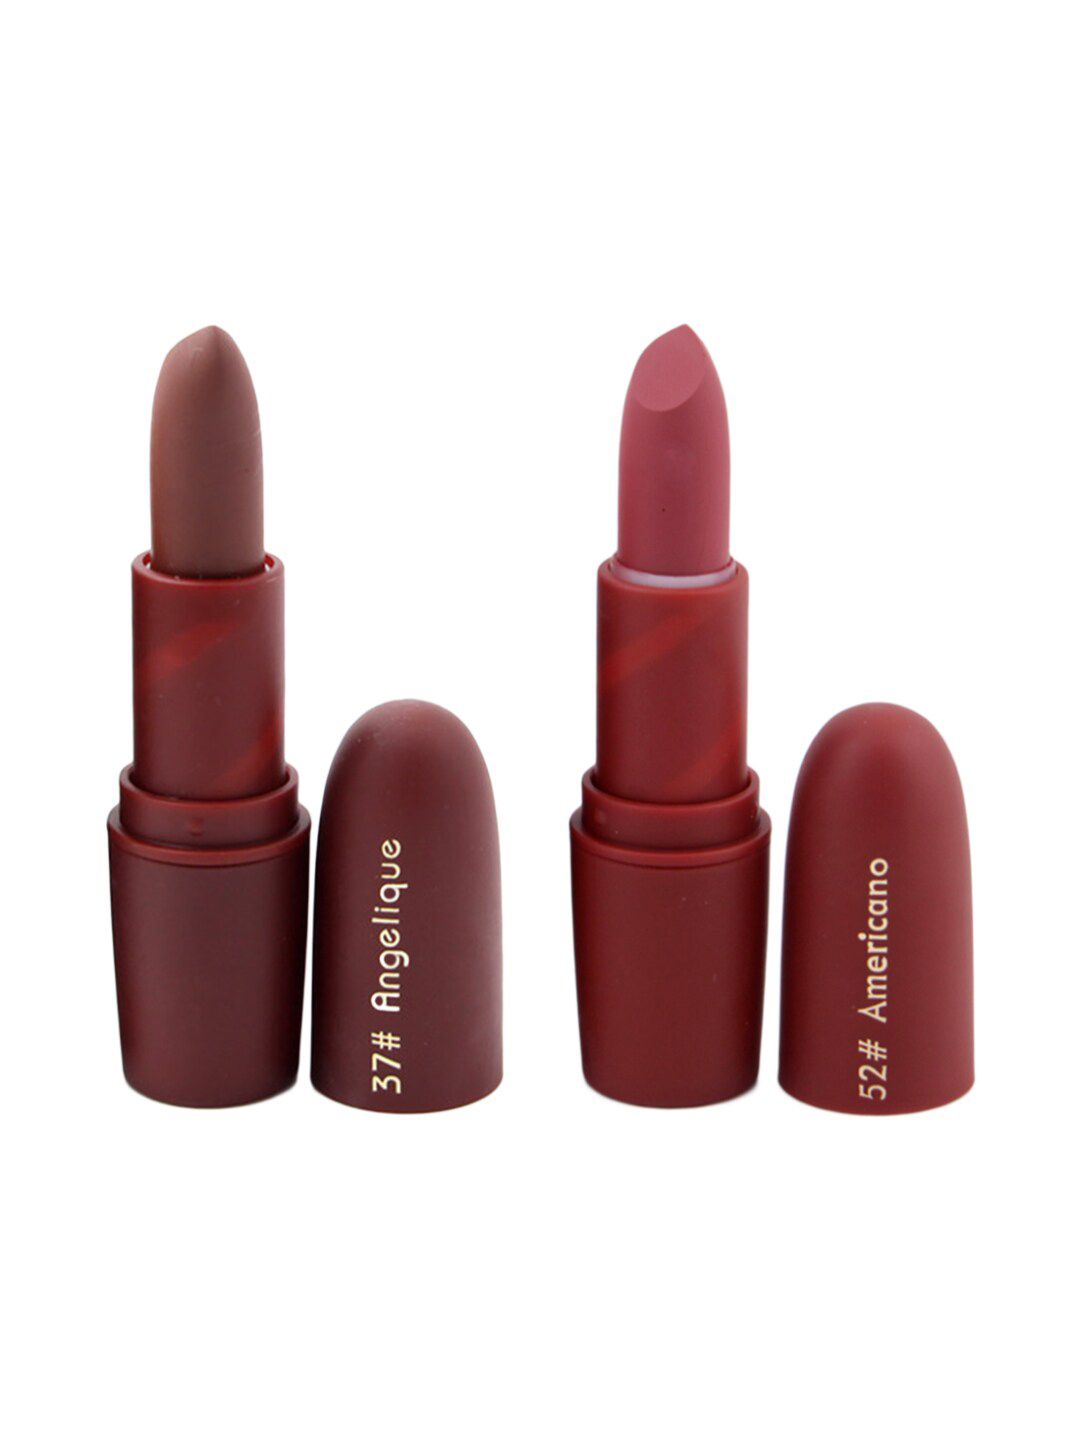 MISS ROSE Professional Make-Up Set of 2 Matte Creamy Lipsticks-Angelique 37 & Americano 52 Price in India